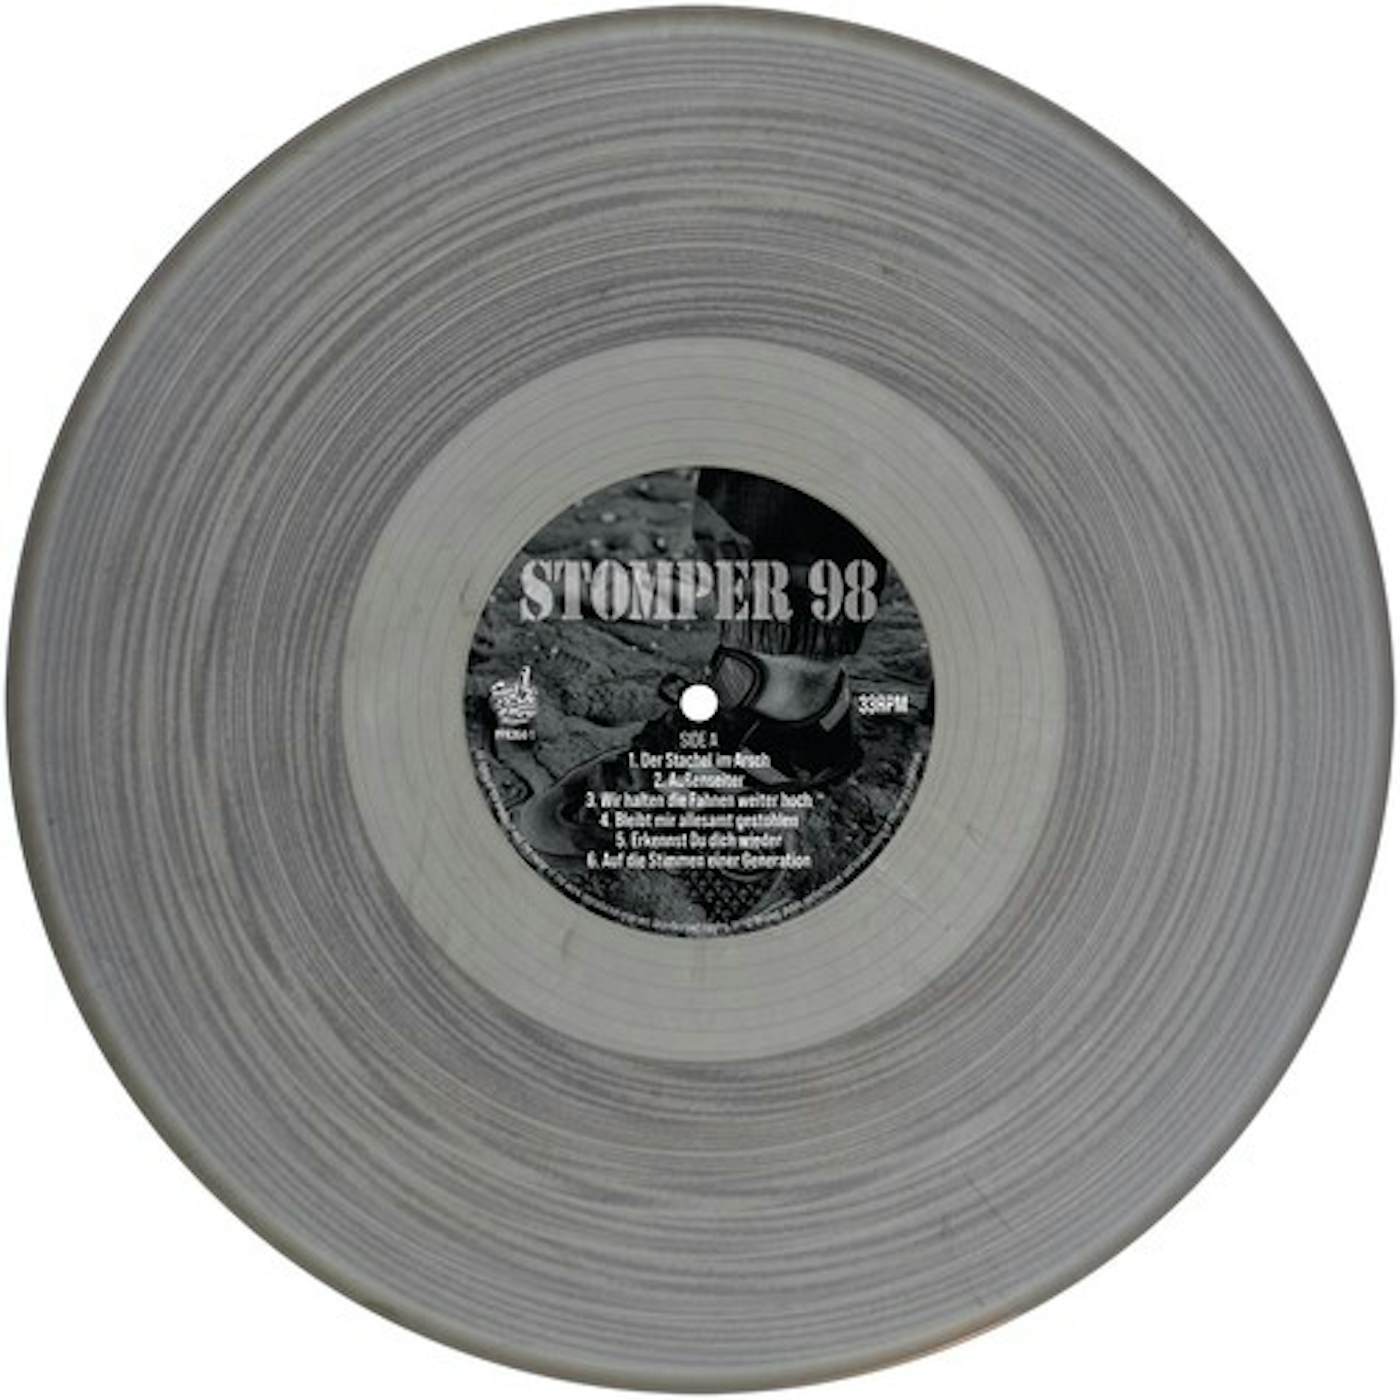 STOMPER 98 Vinyl Record